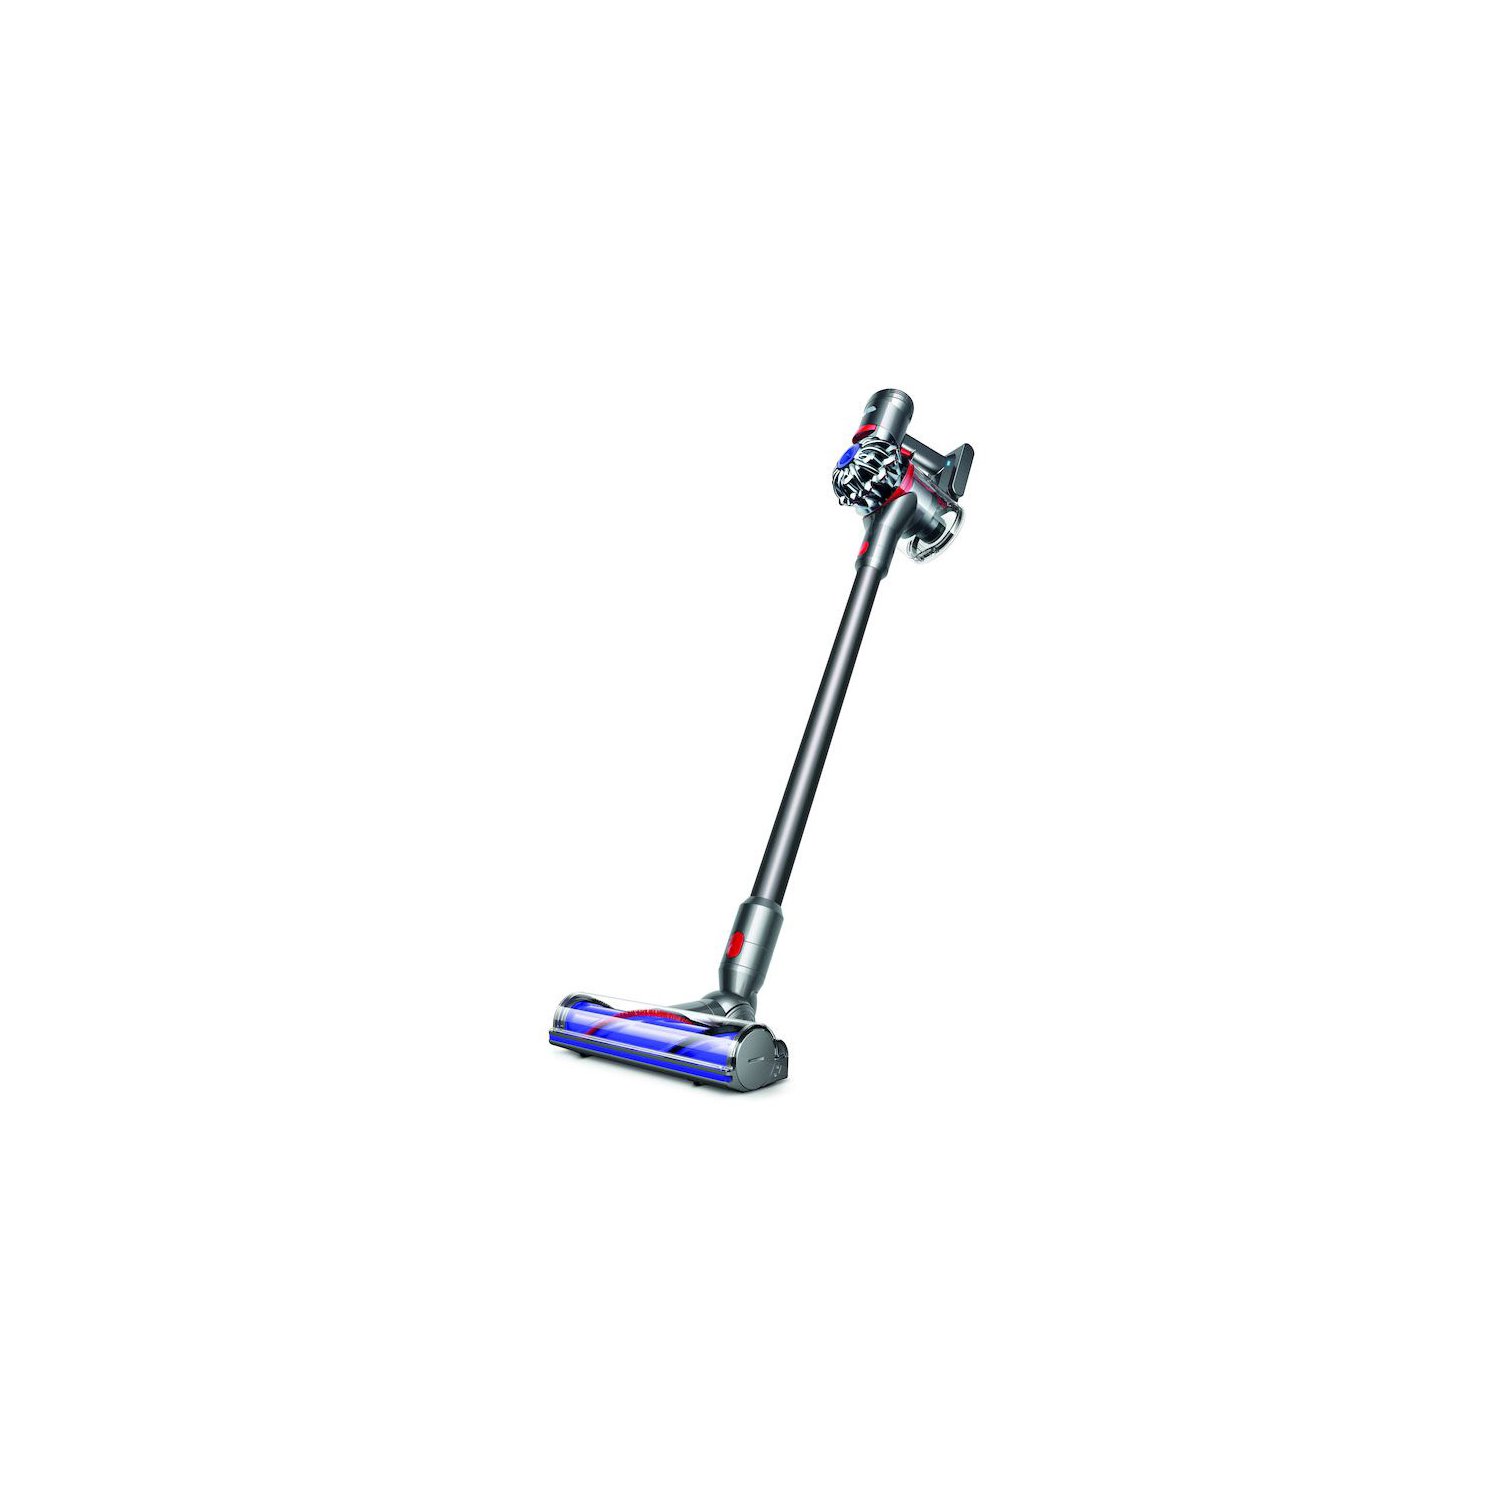 Dyson V7 Animal Extra Cord-Free Stick Vacuum with Bonus Hard Floor Tool- $199.98 Aug. 1-9